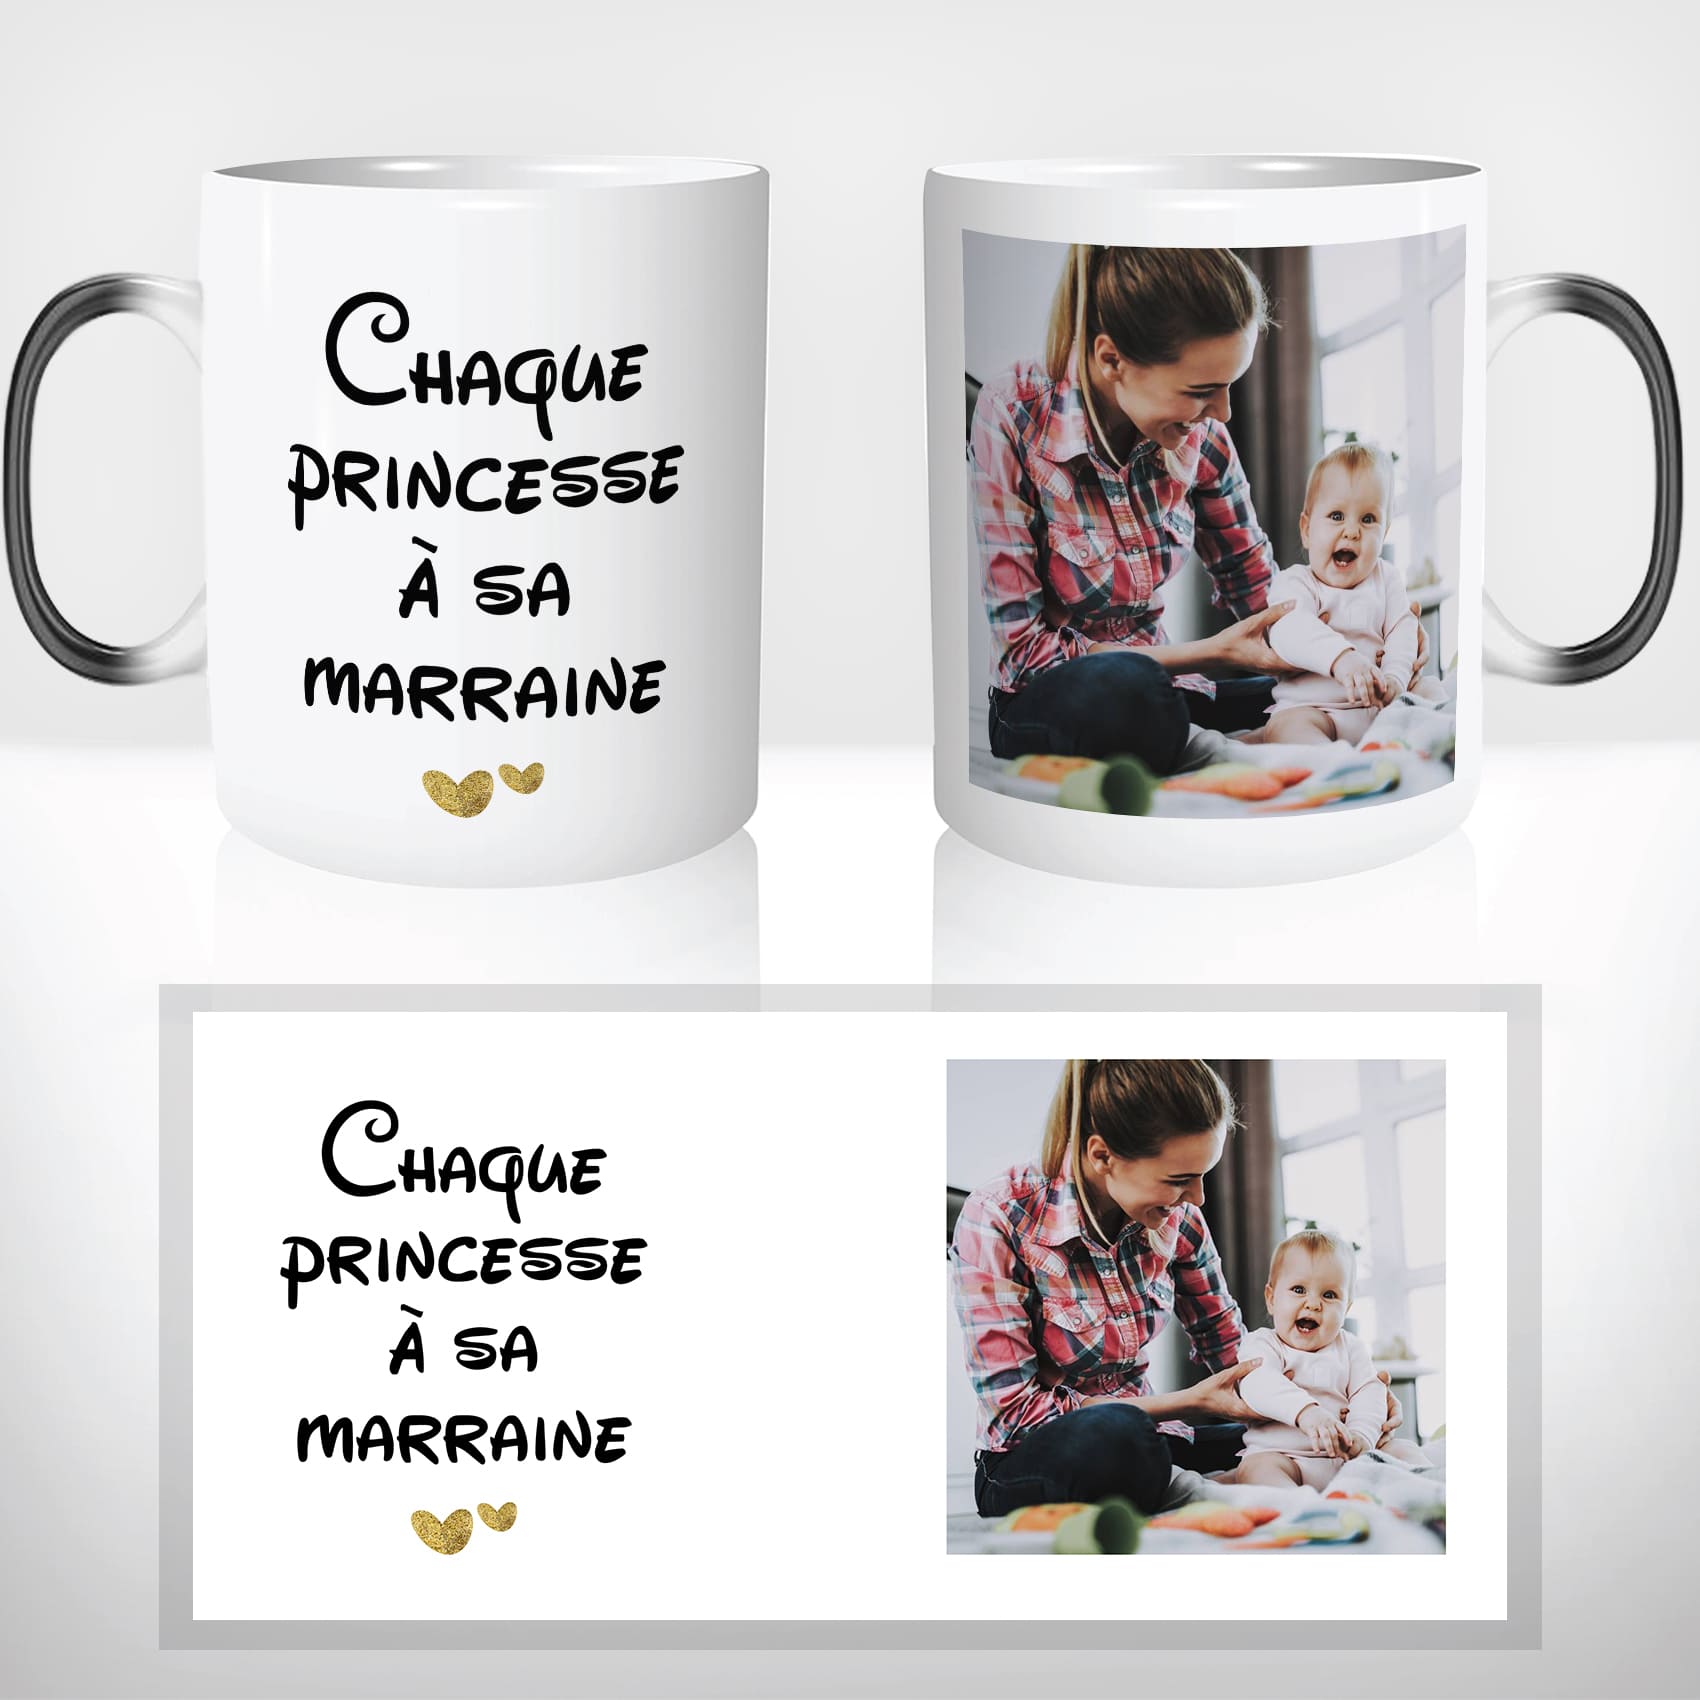 https://media.cdnws.com/_i/273136/3215/127/17/mug-magique-personnalisable-thermoreactif-thermique-tasse-chaque-princesse-marraine-naissance-photo-personnalises-fun-idee-cadeau-original.jpeg